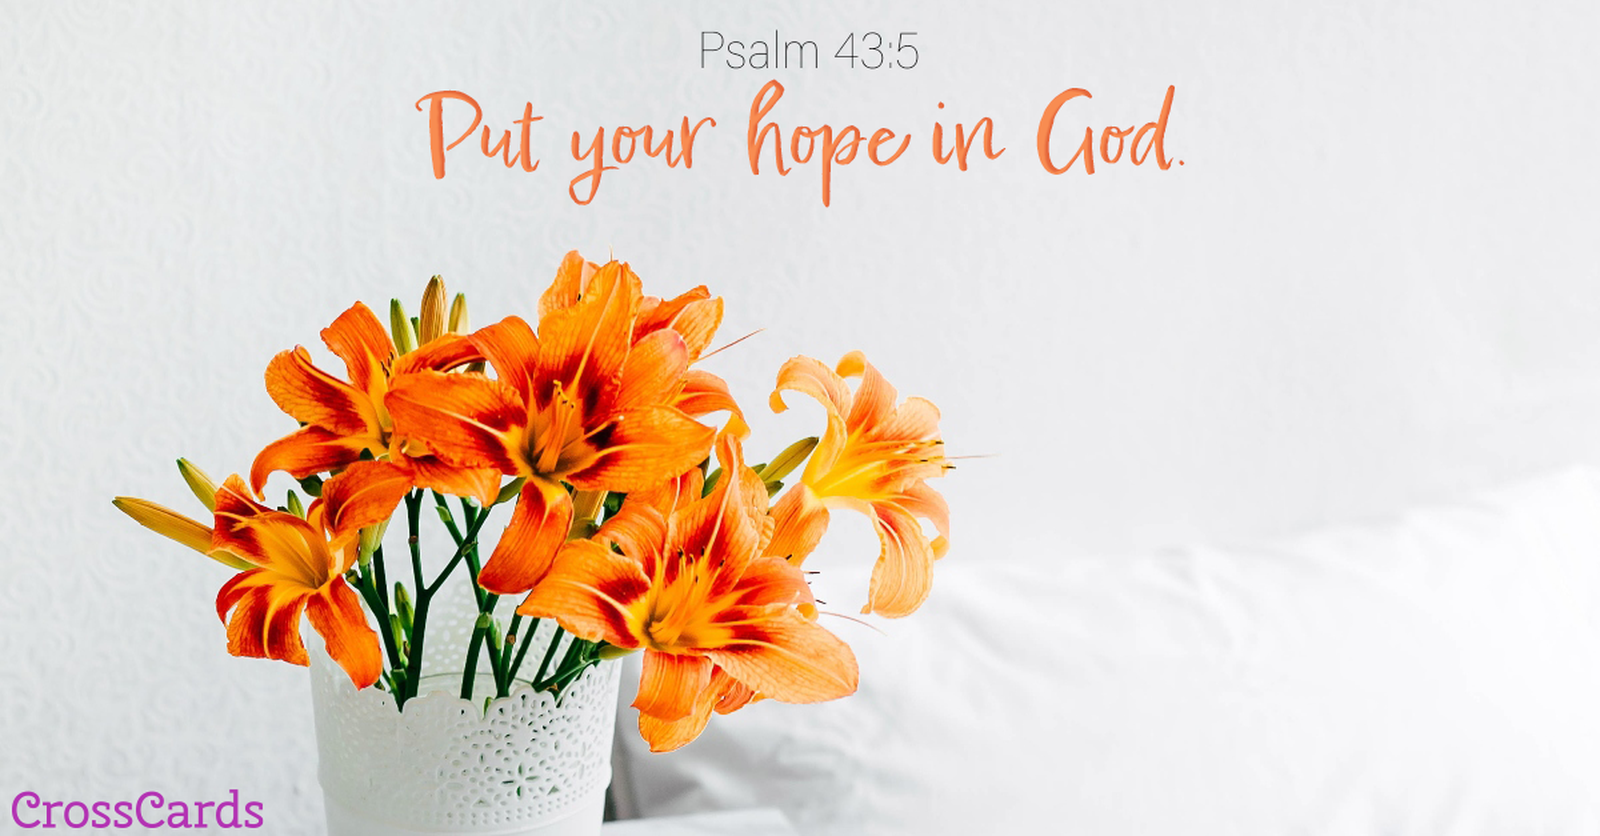 Psalm 43:5 - Hope in God ecard, online card